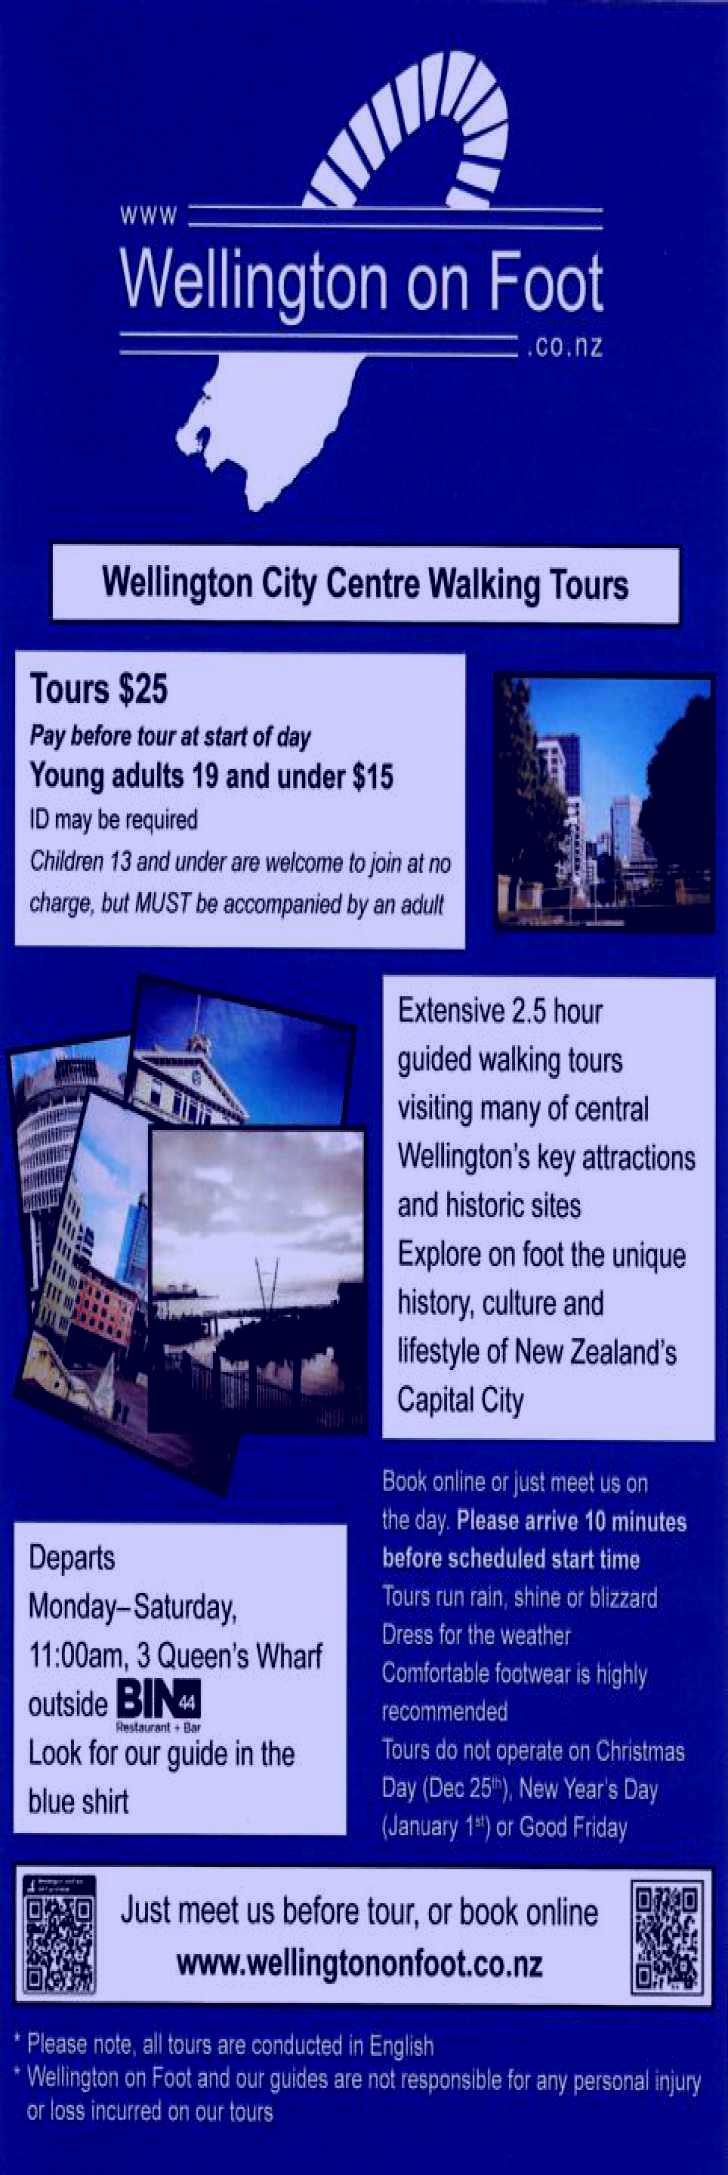 SubjectCoach | Wellington City Walking Tour